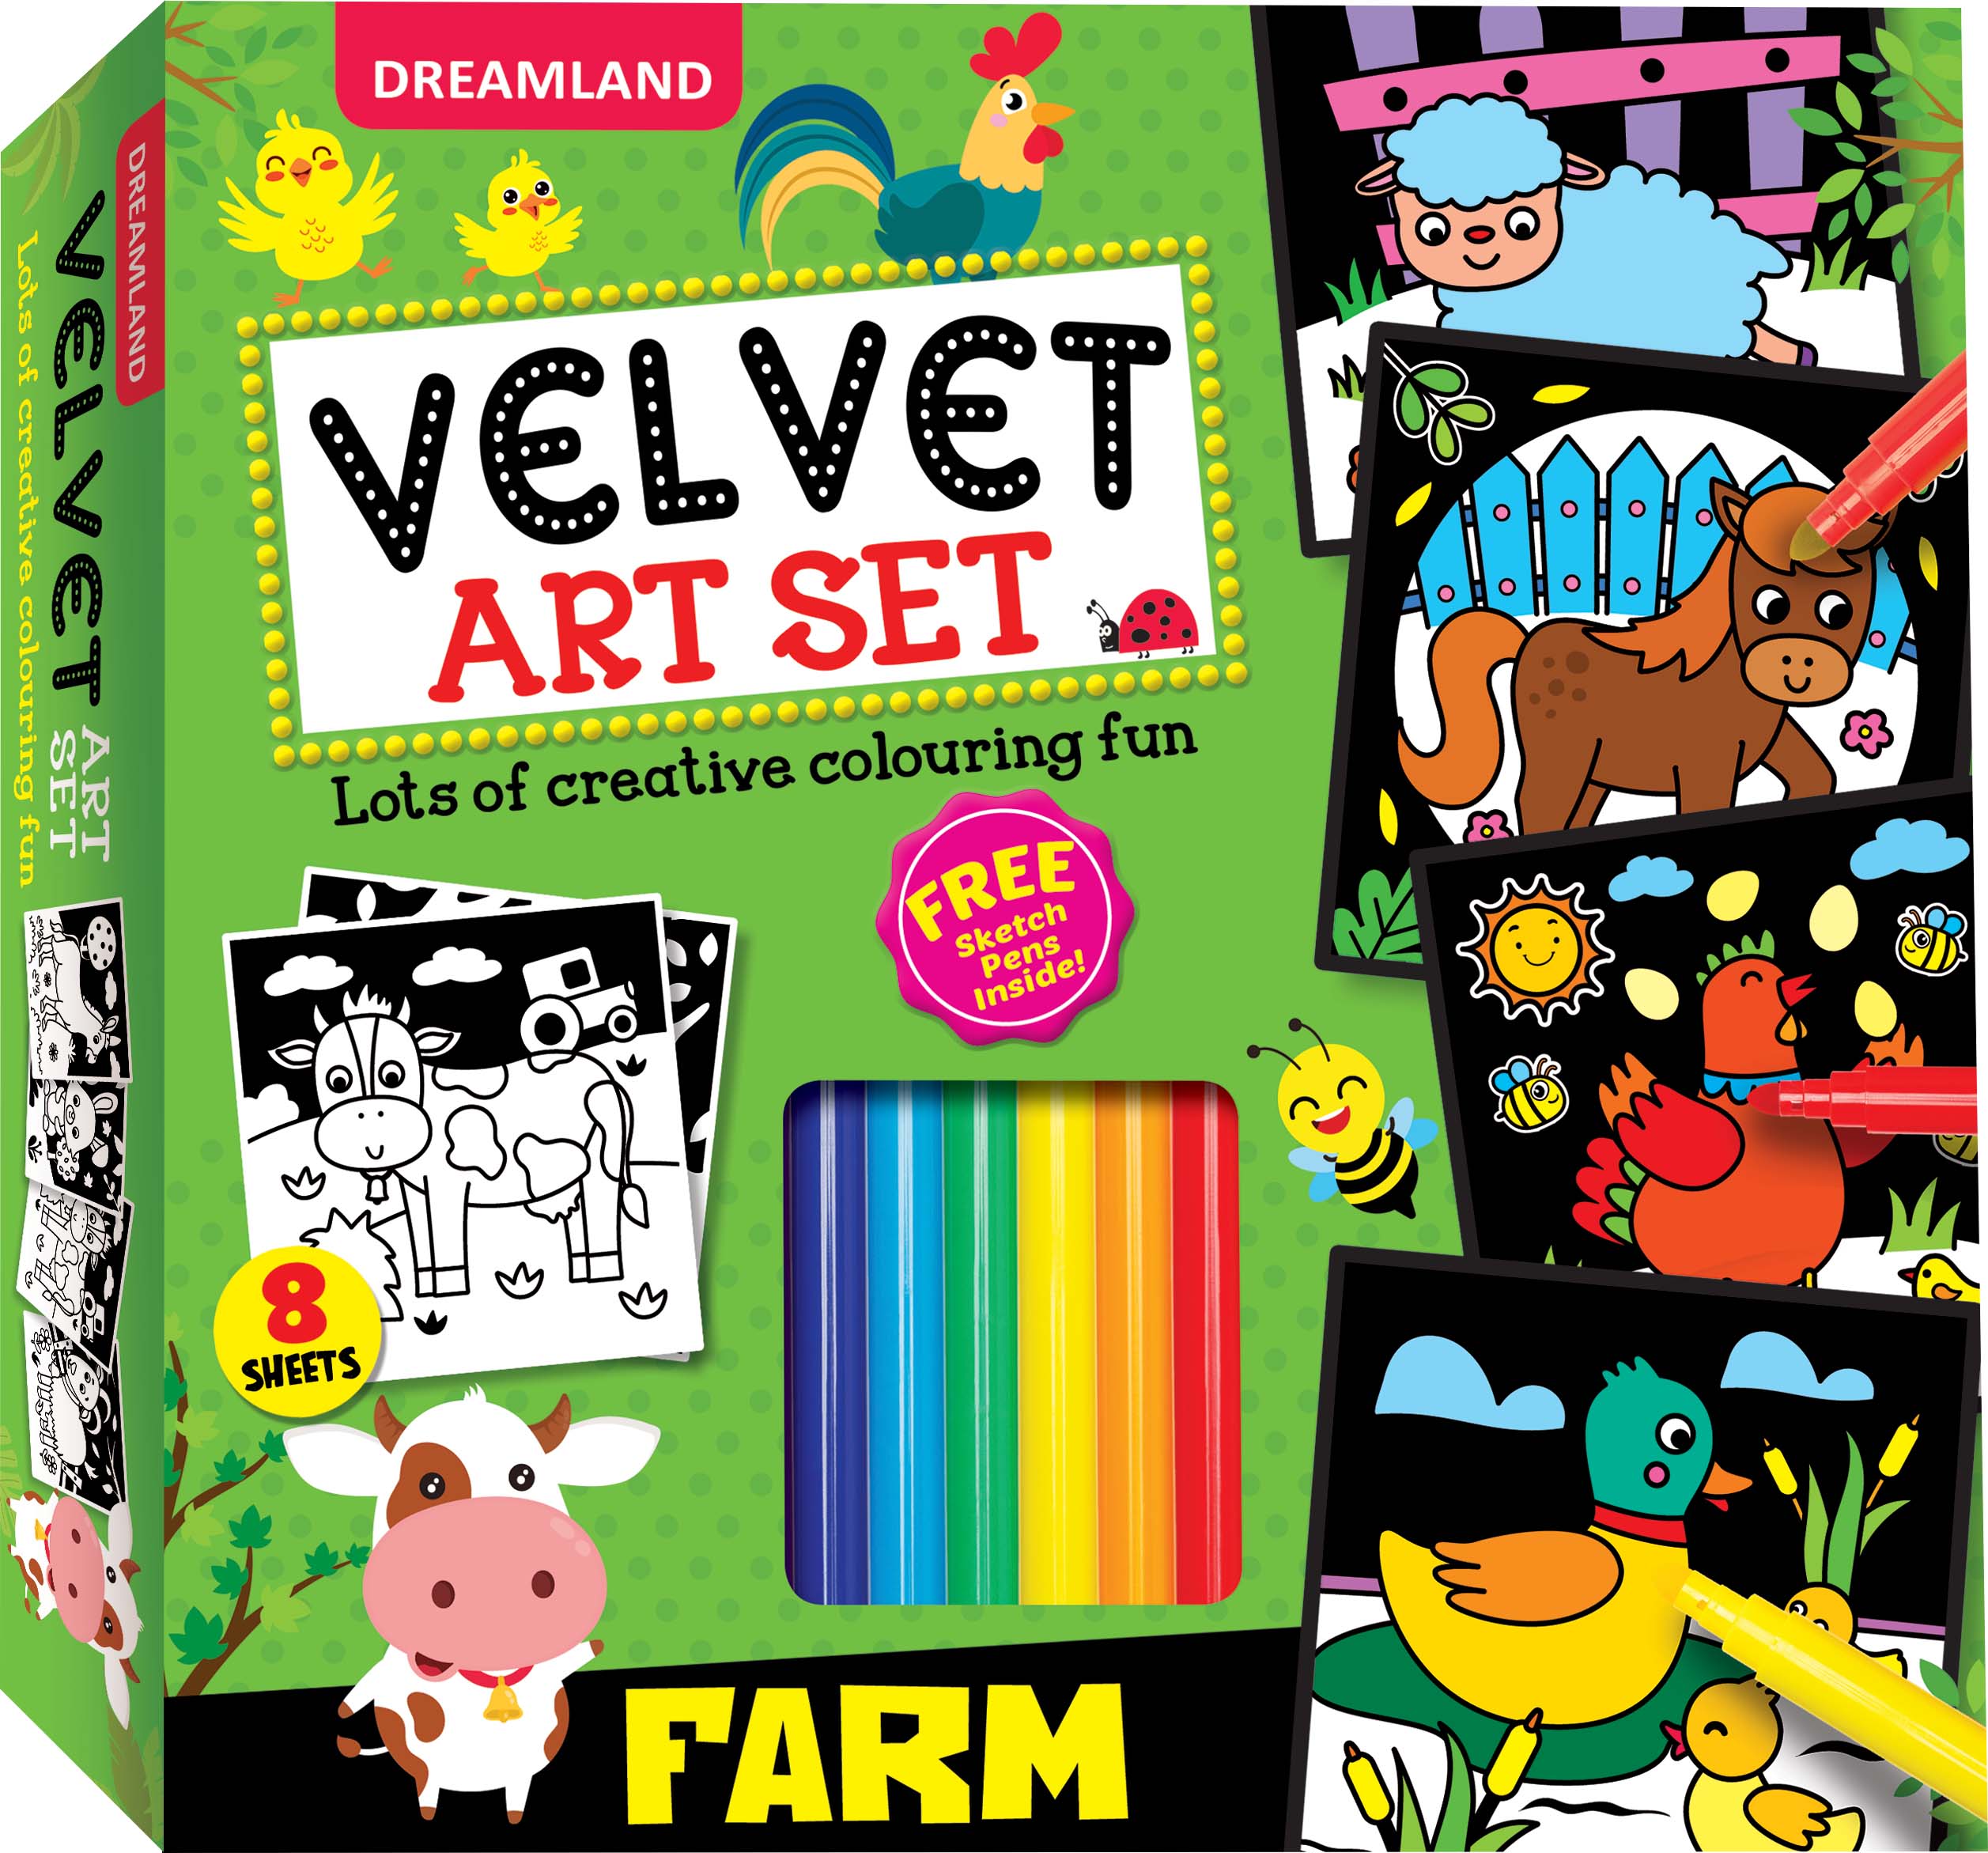 Farm – Velvet Art Set With 10 Free Sketch Pens